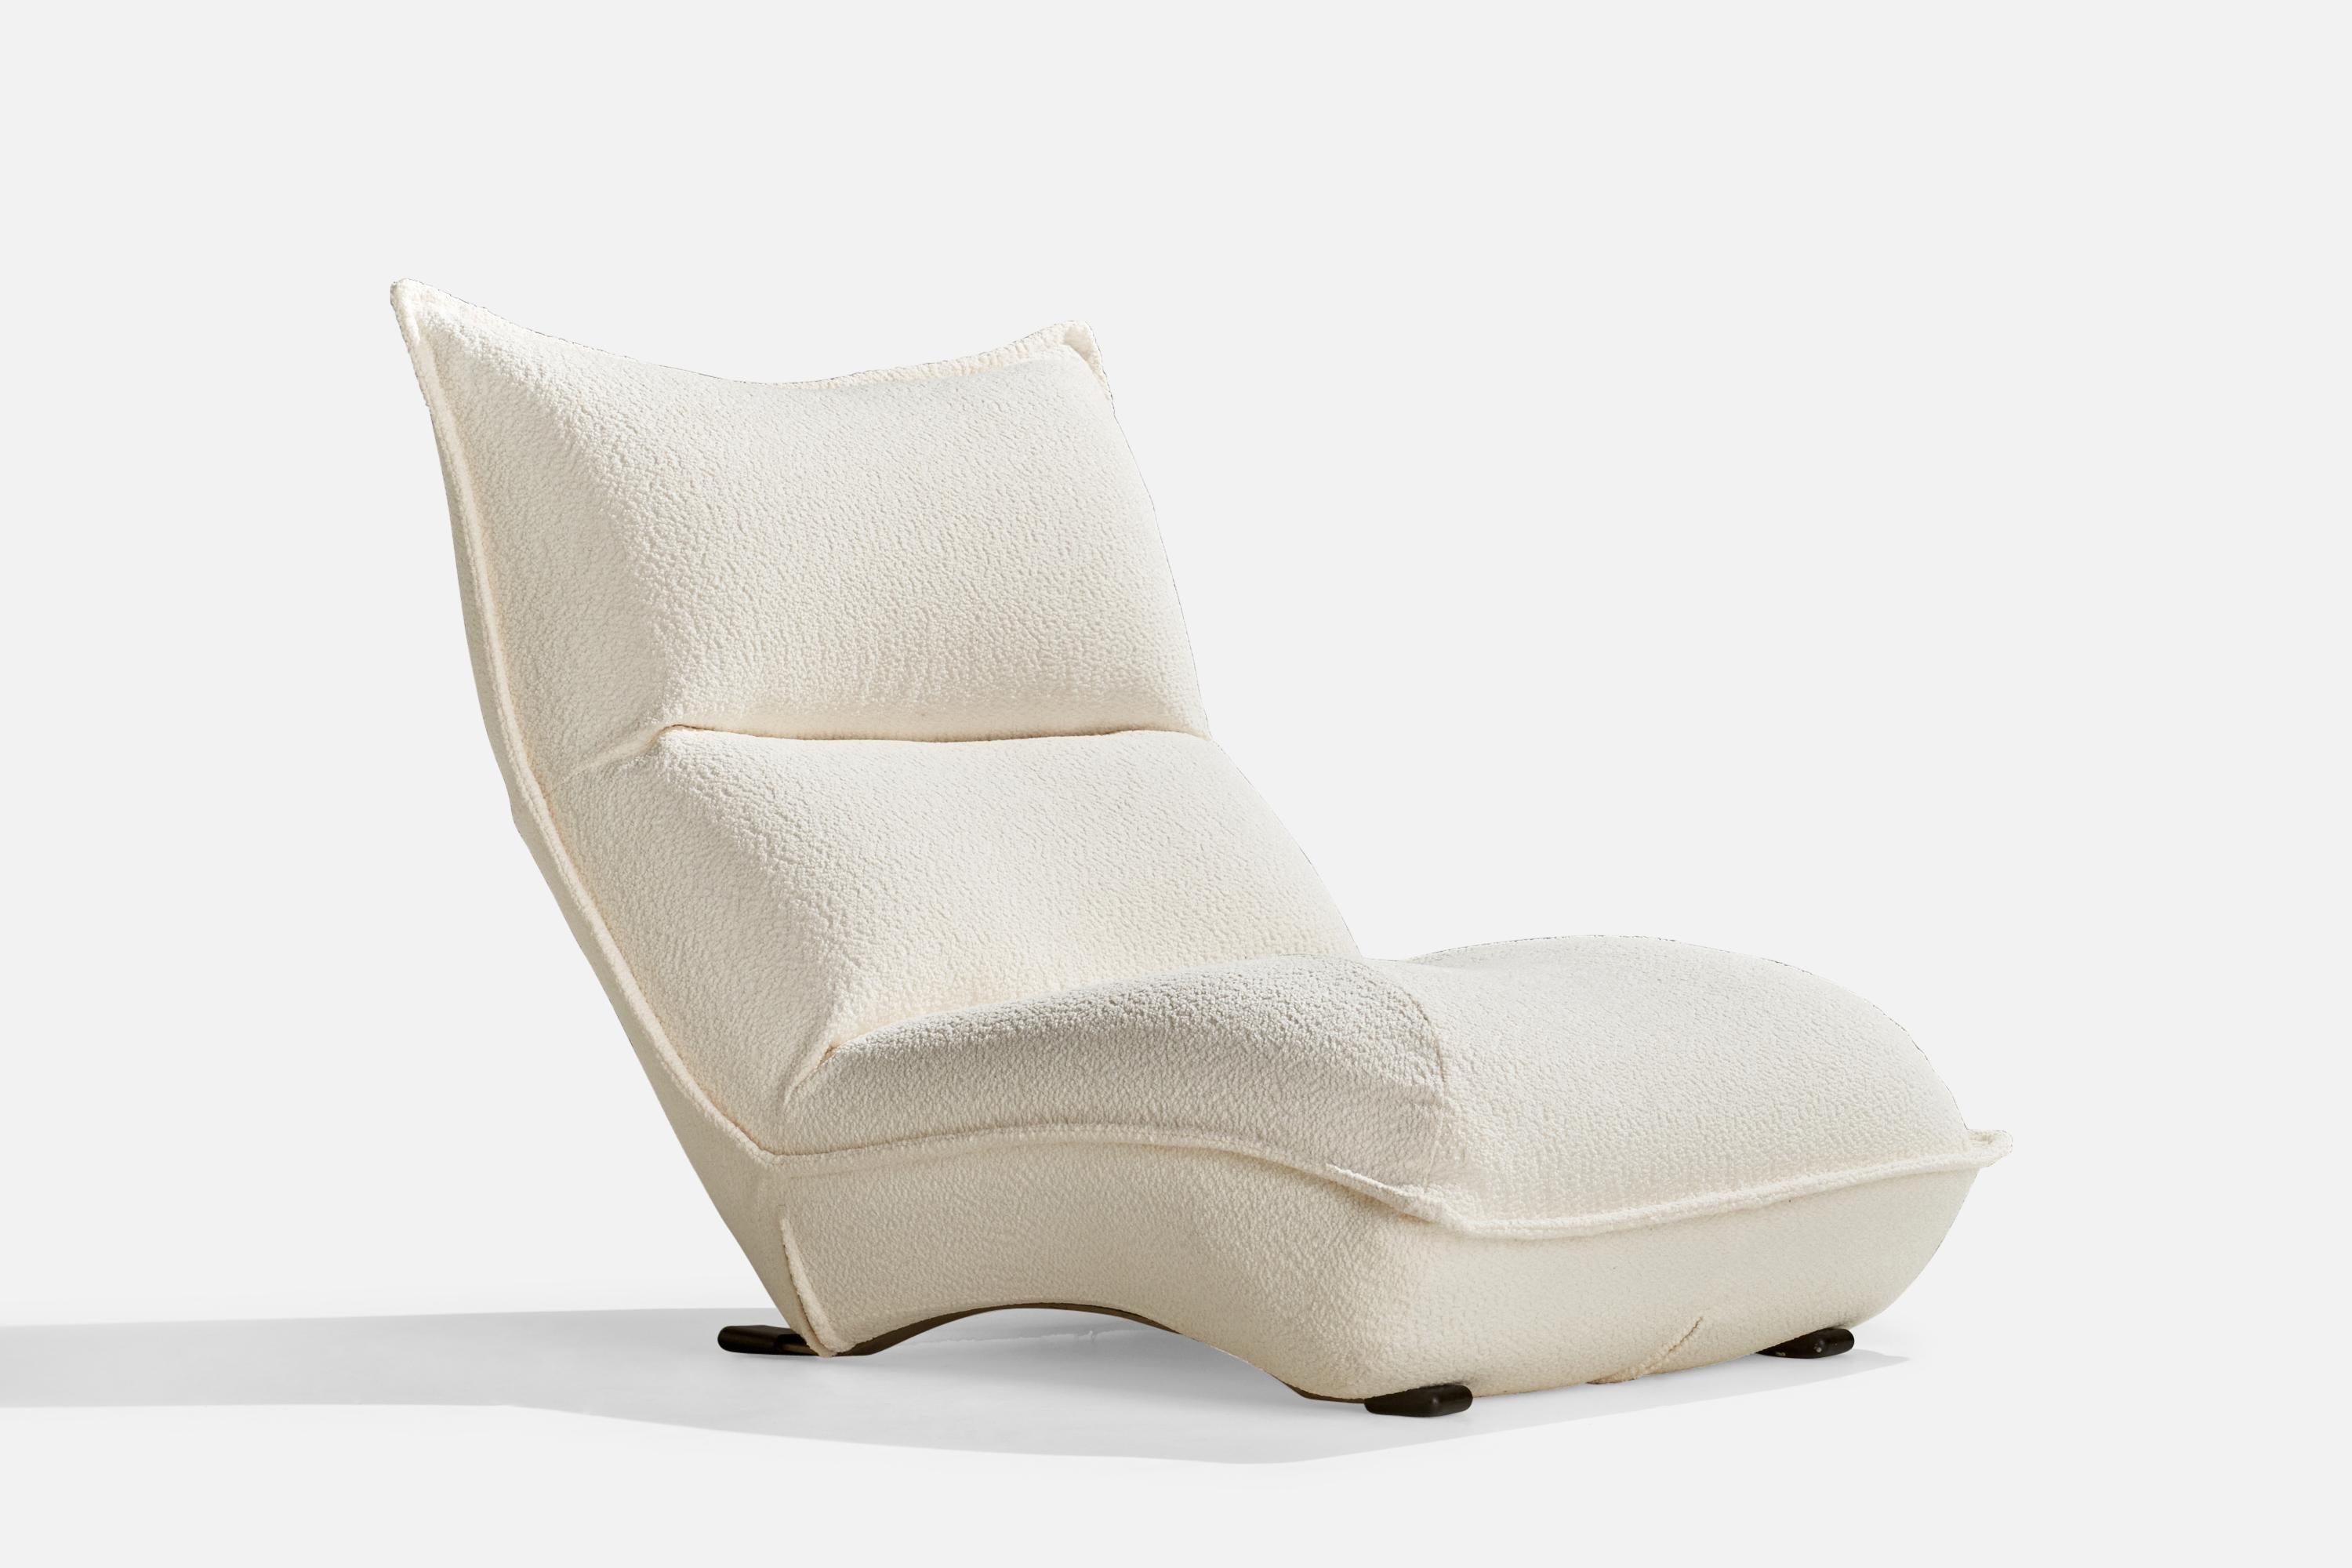 Late 20th Century Vittorio Varo, Slipper Chairs, Fabric, Metal, Plastic, Italy, 1970s For Sale